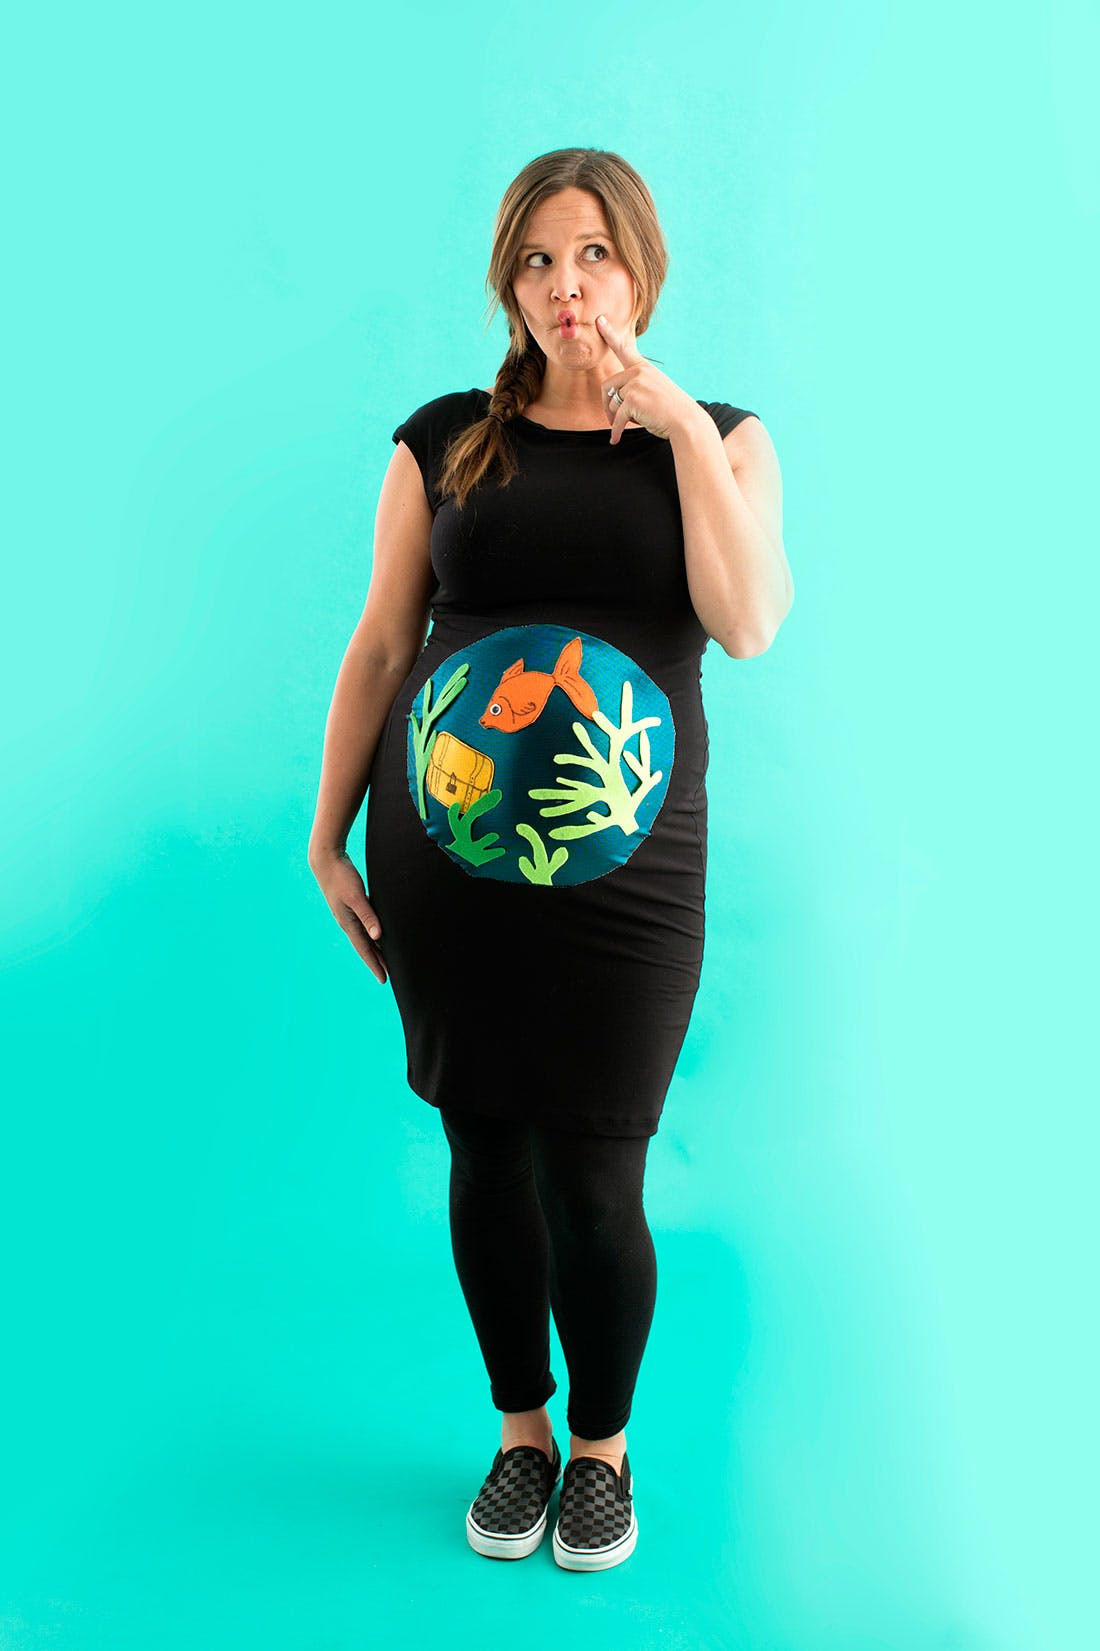 DIY Pregnant Halloween Costumes
 10 DIY Maternity Halloween Costume Ideas for Pregnant